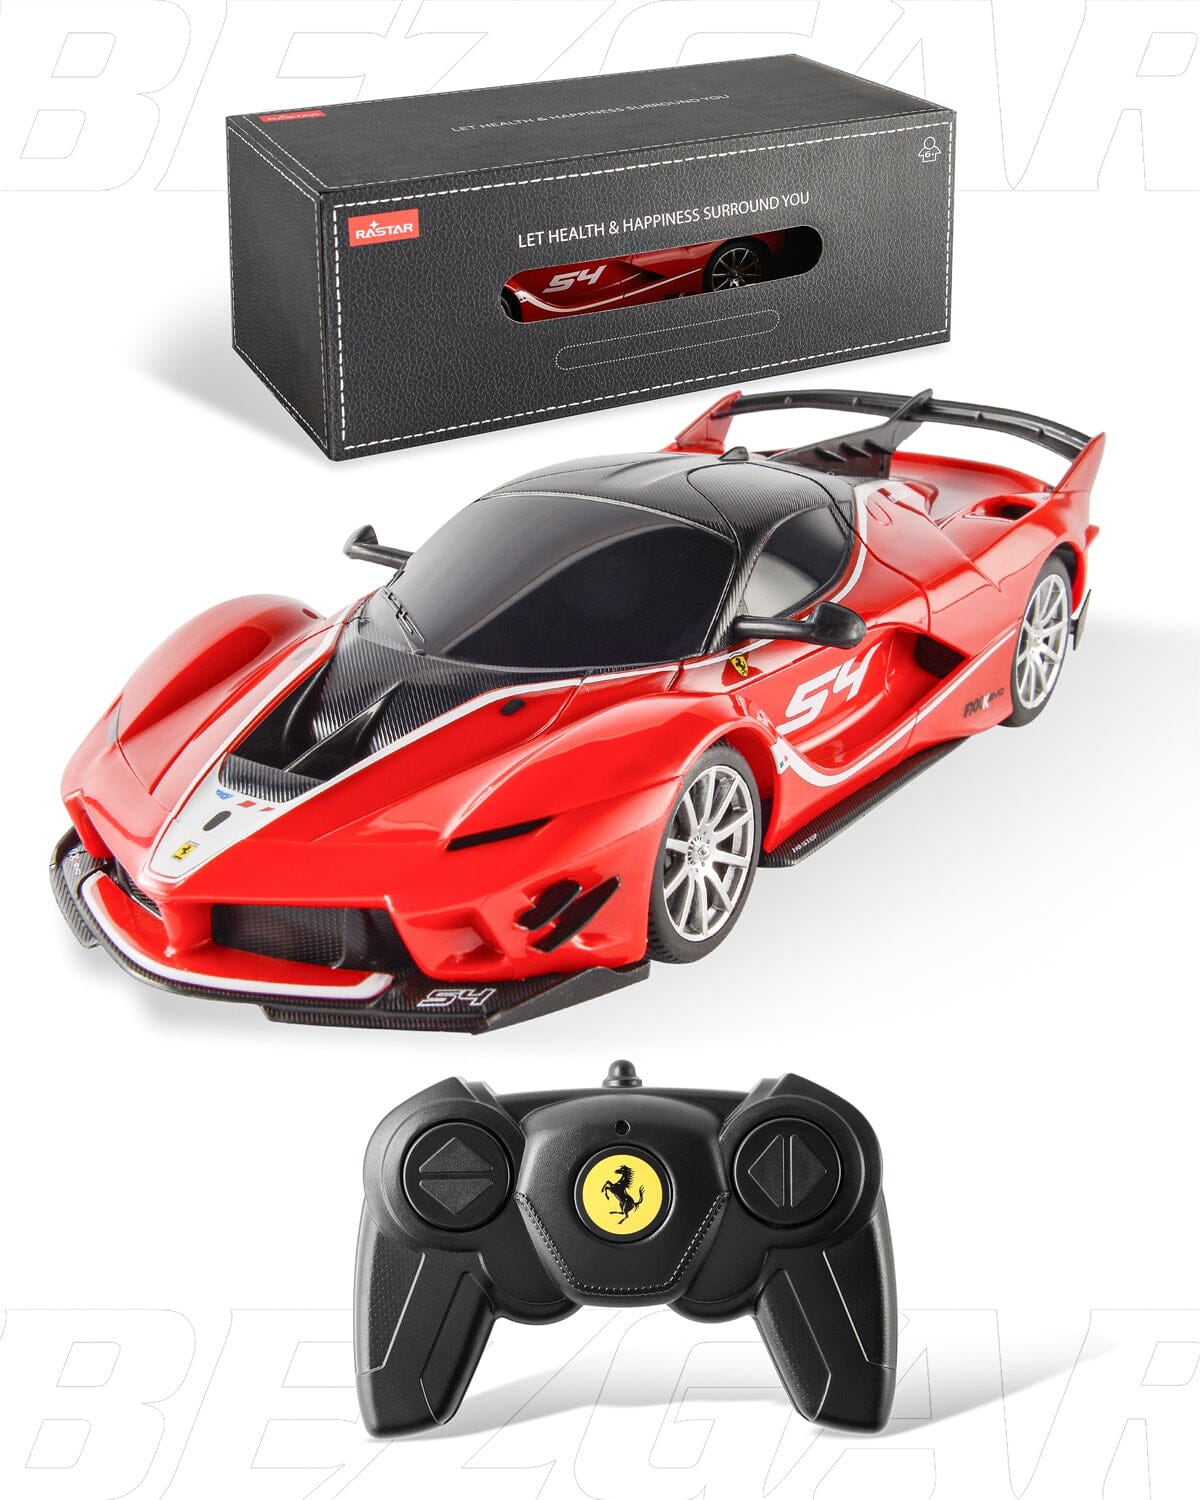 Voiture Ferrari radiocommandée